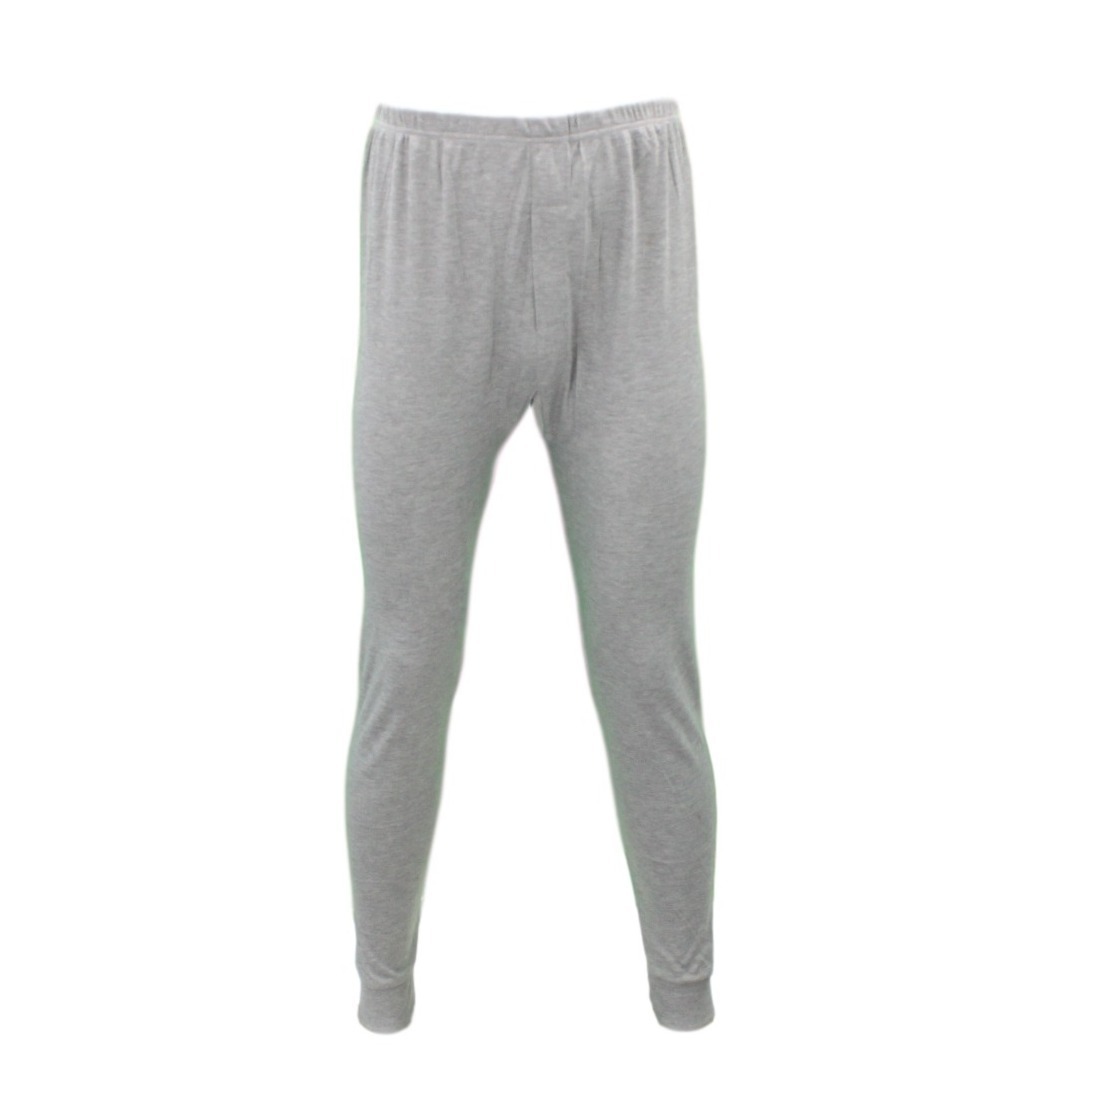 FIL Men's Cotton Thermal Pants Leggings Long Johns Underwear - Men's Long  Johns - Grey